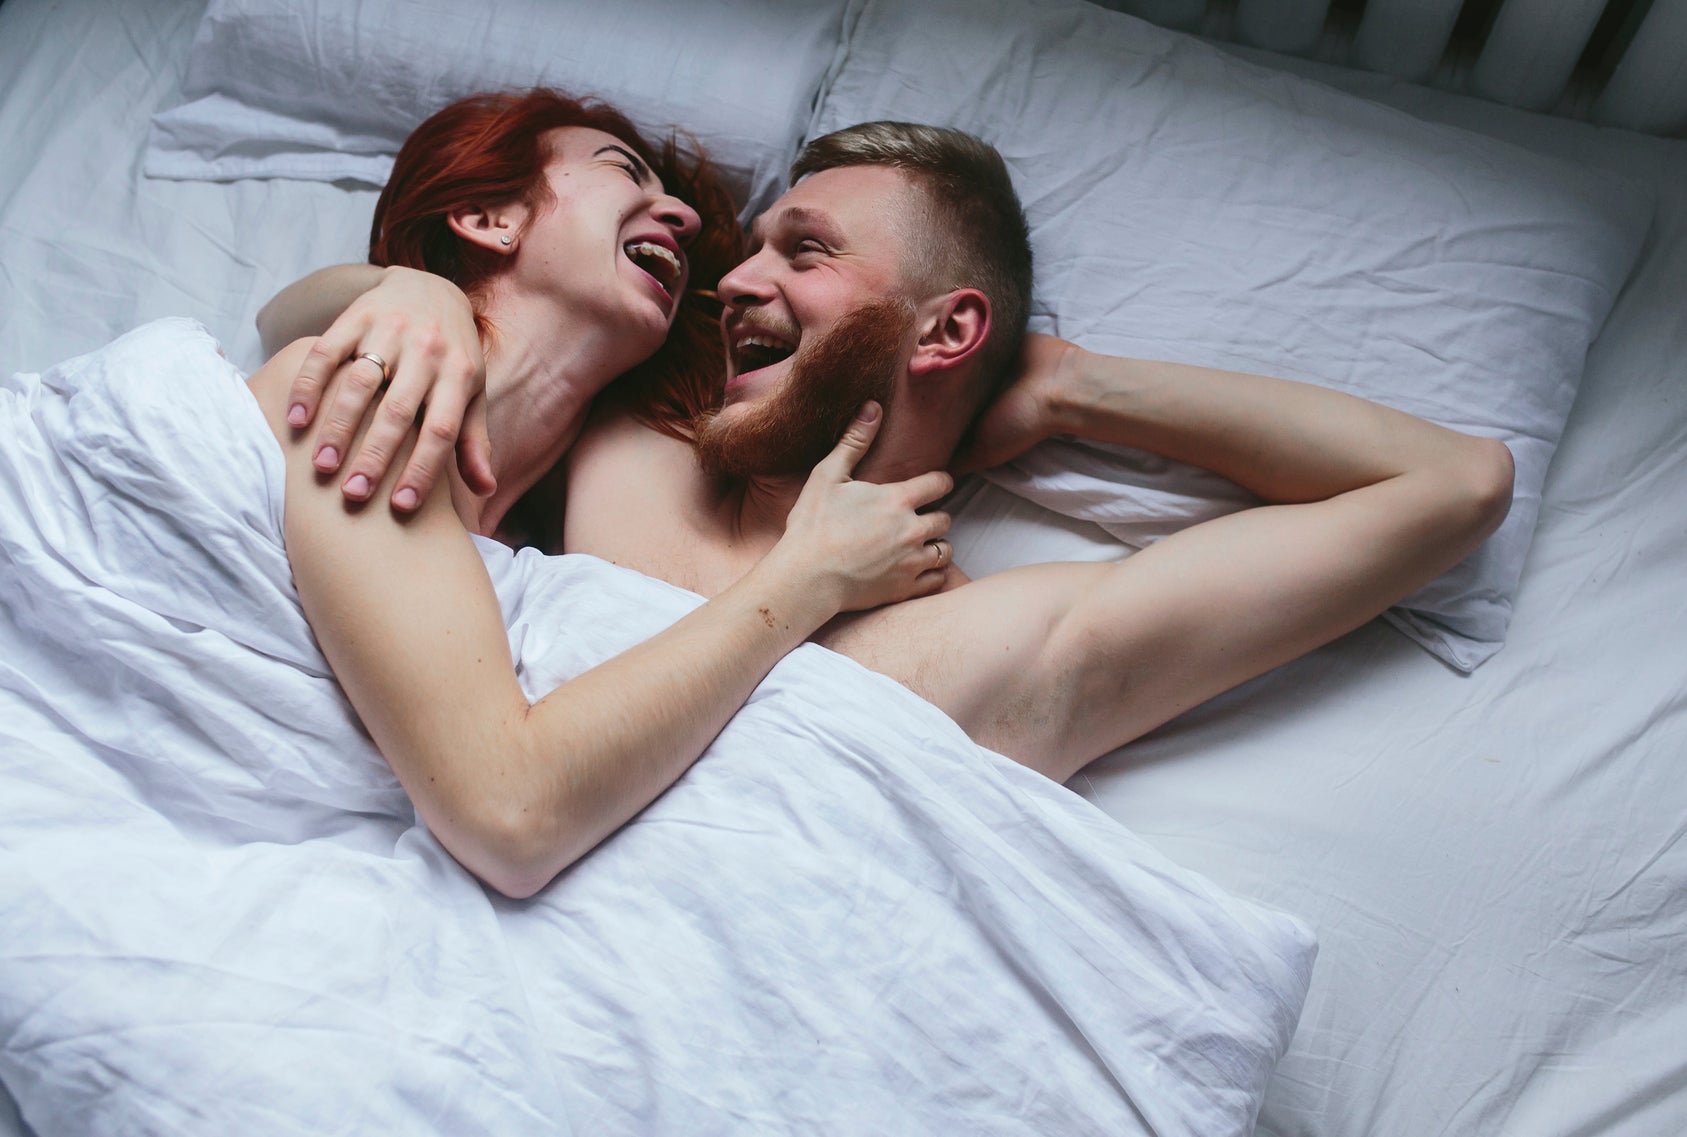 Amateur couple in bed invite friend